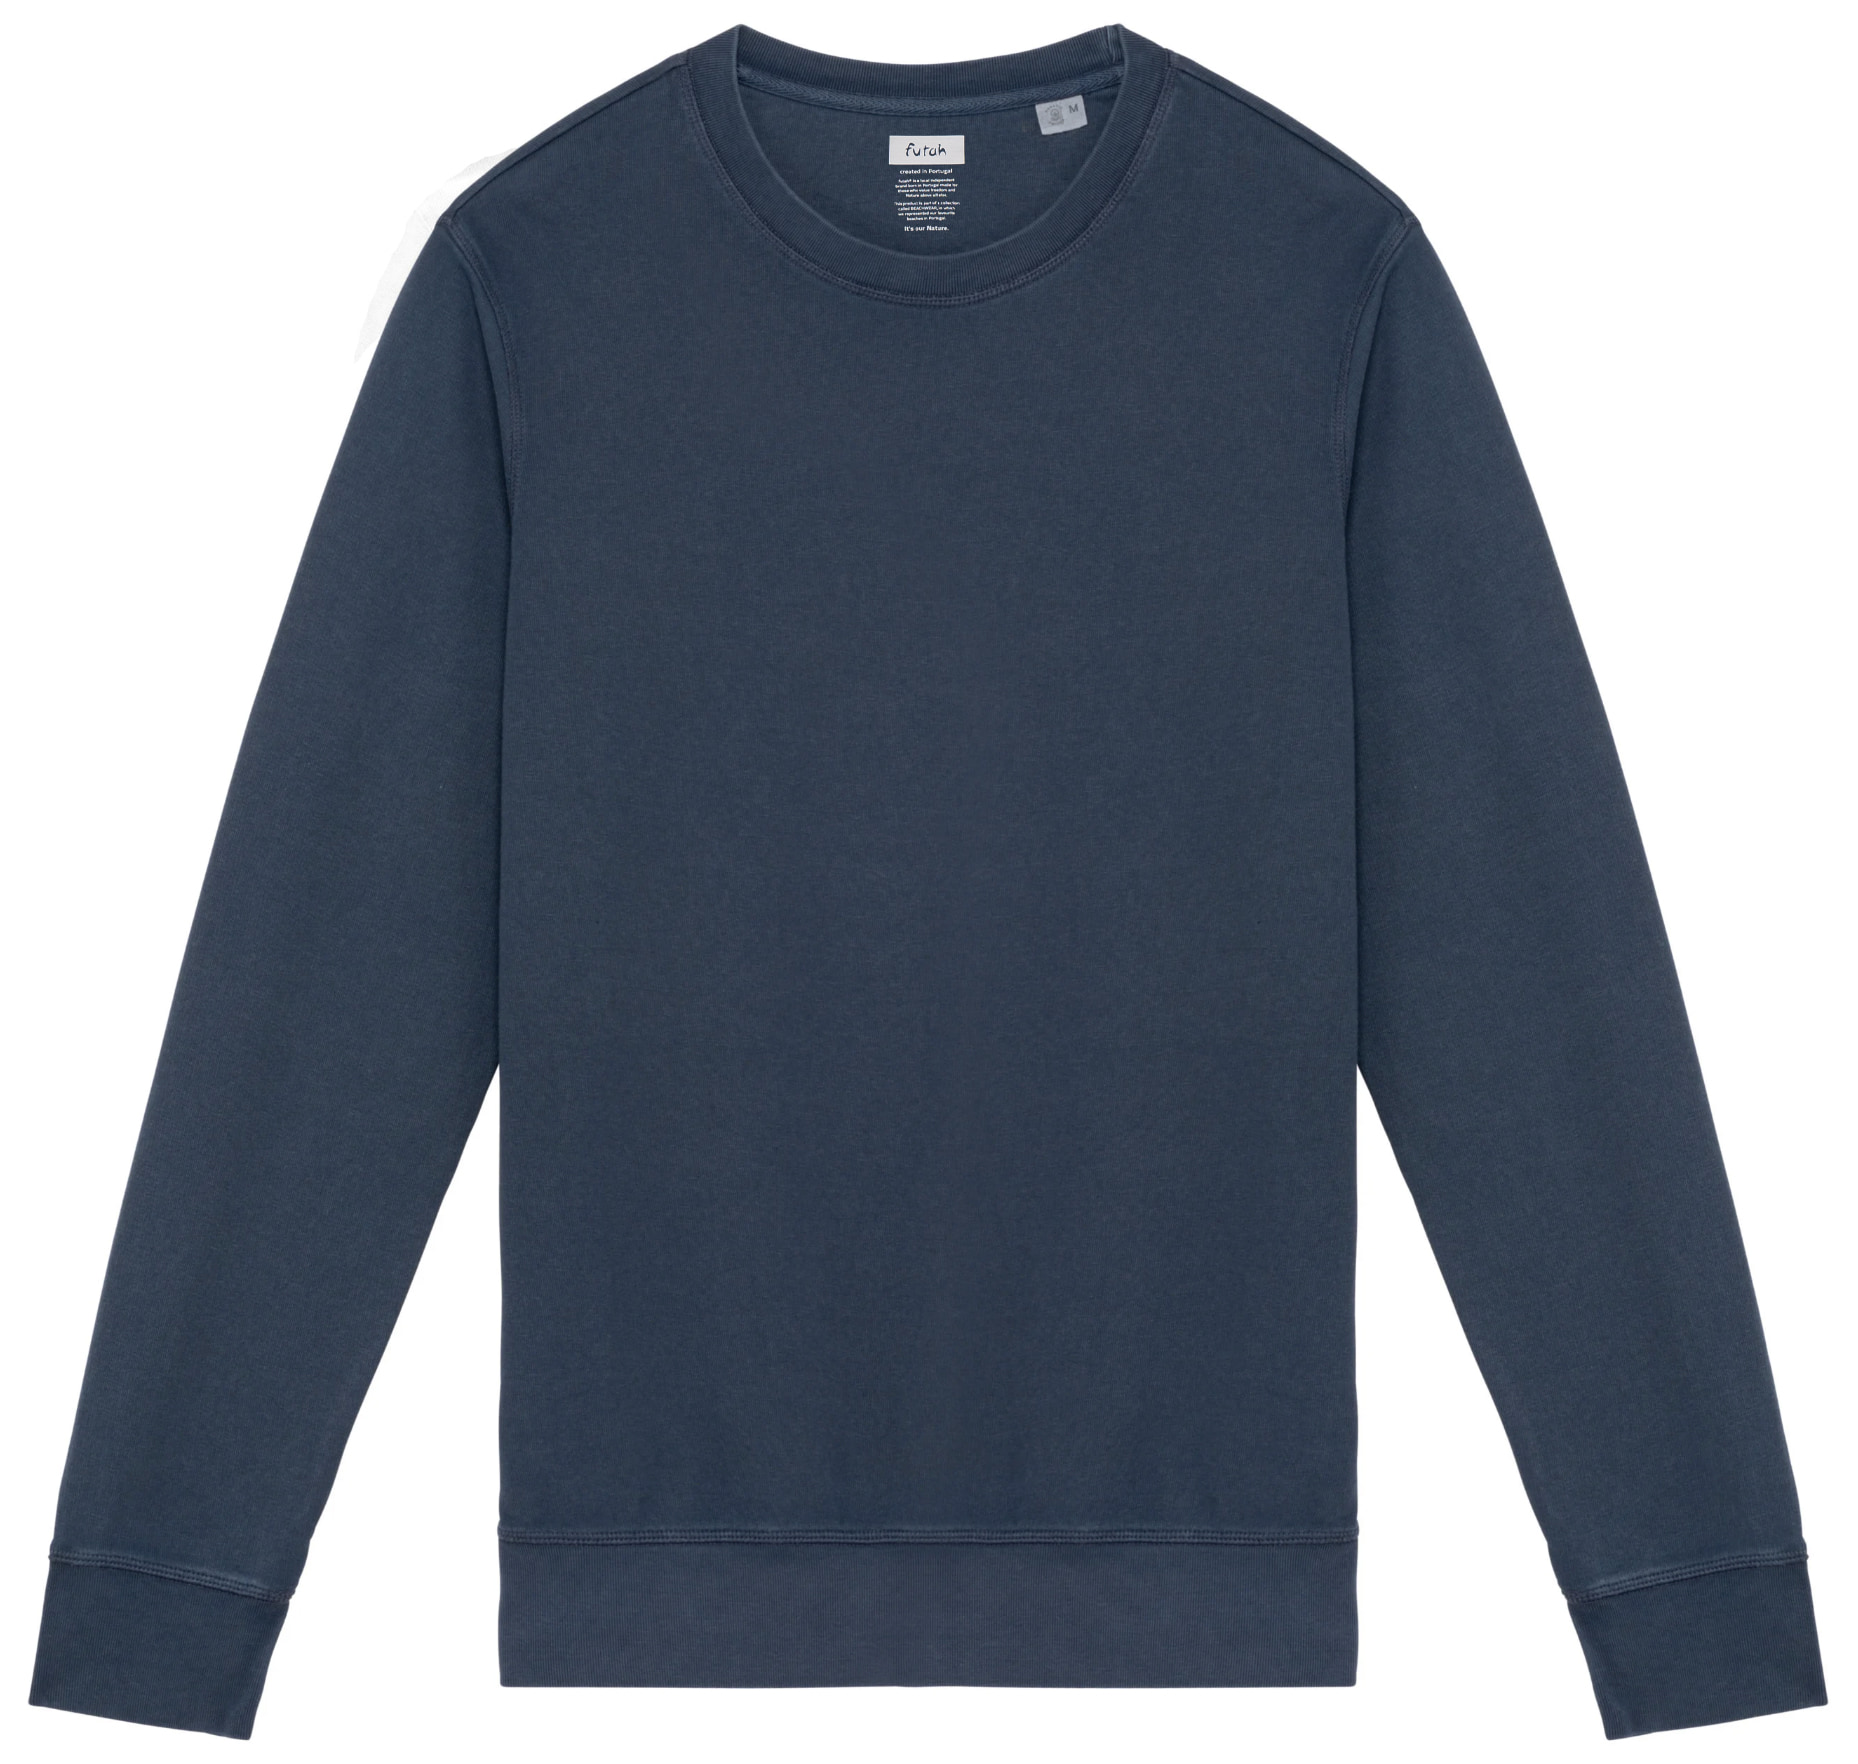 Futah - Organic Cotton Sweatshirt - Navy (1)